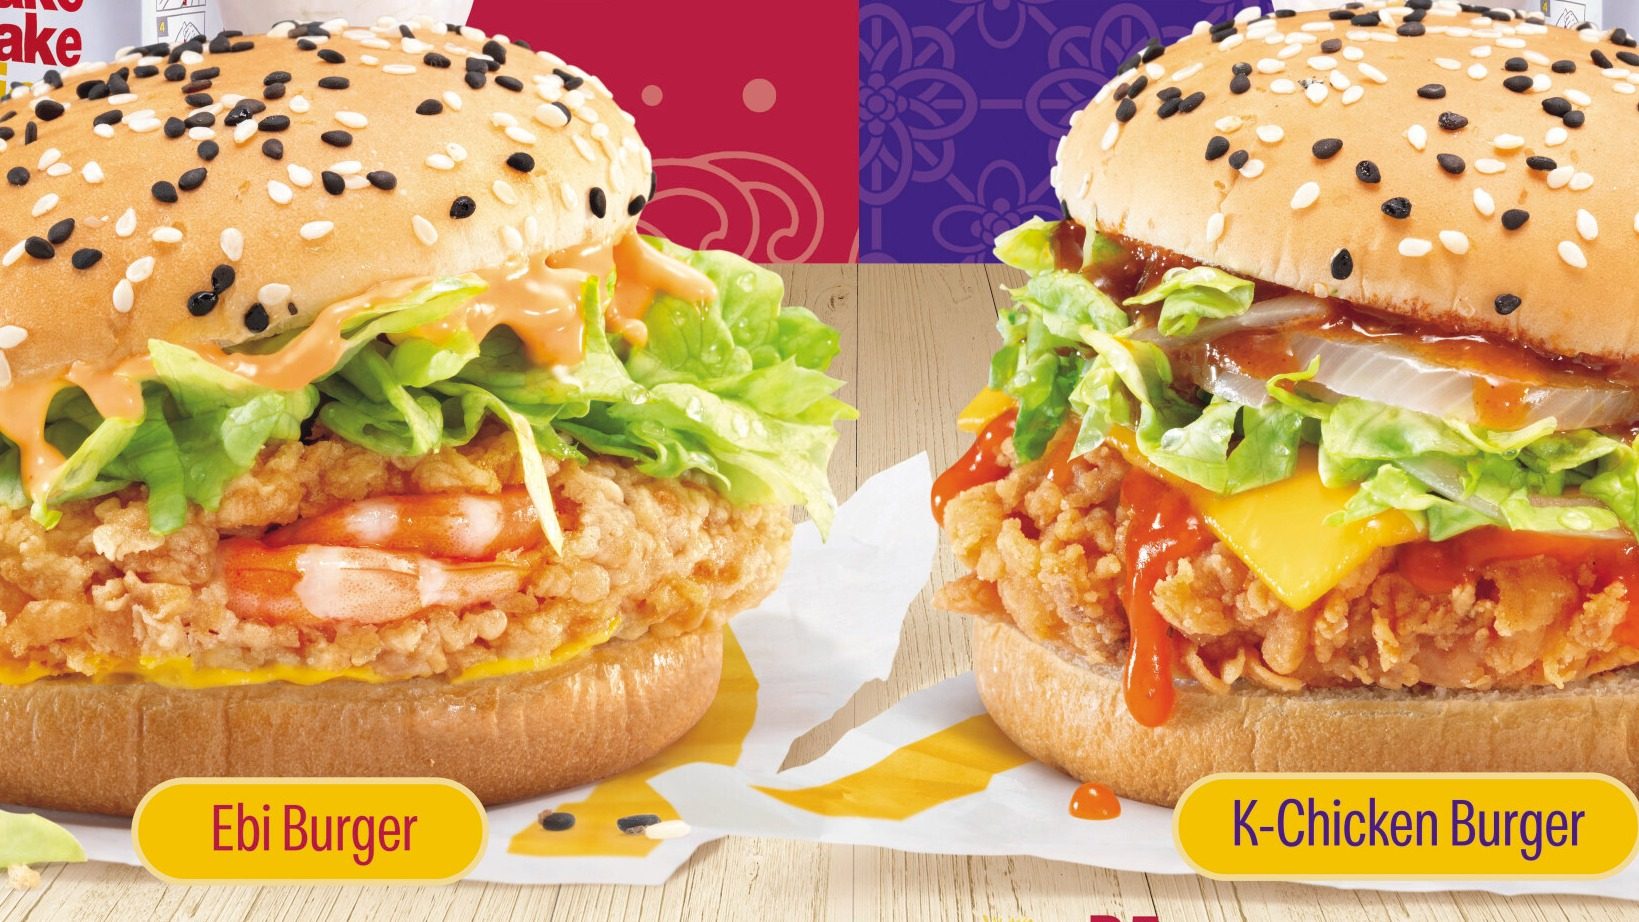 They’re back! McDonald’s Korean, Japanese-inspired items return to menu